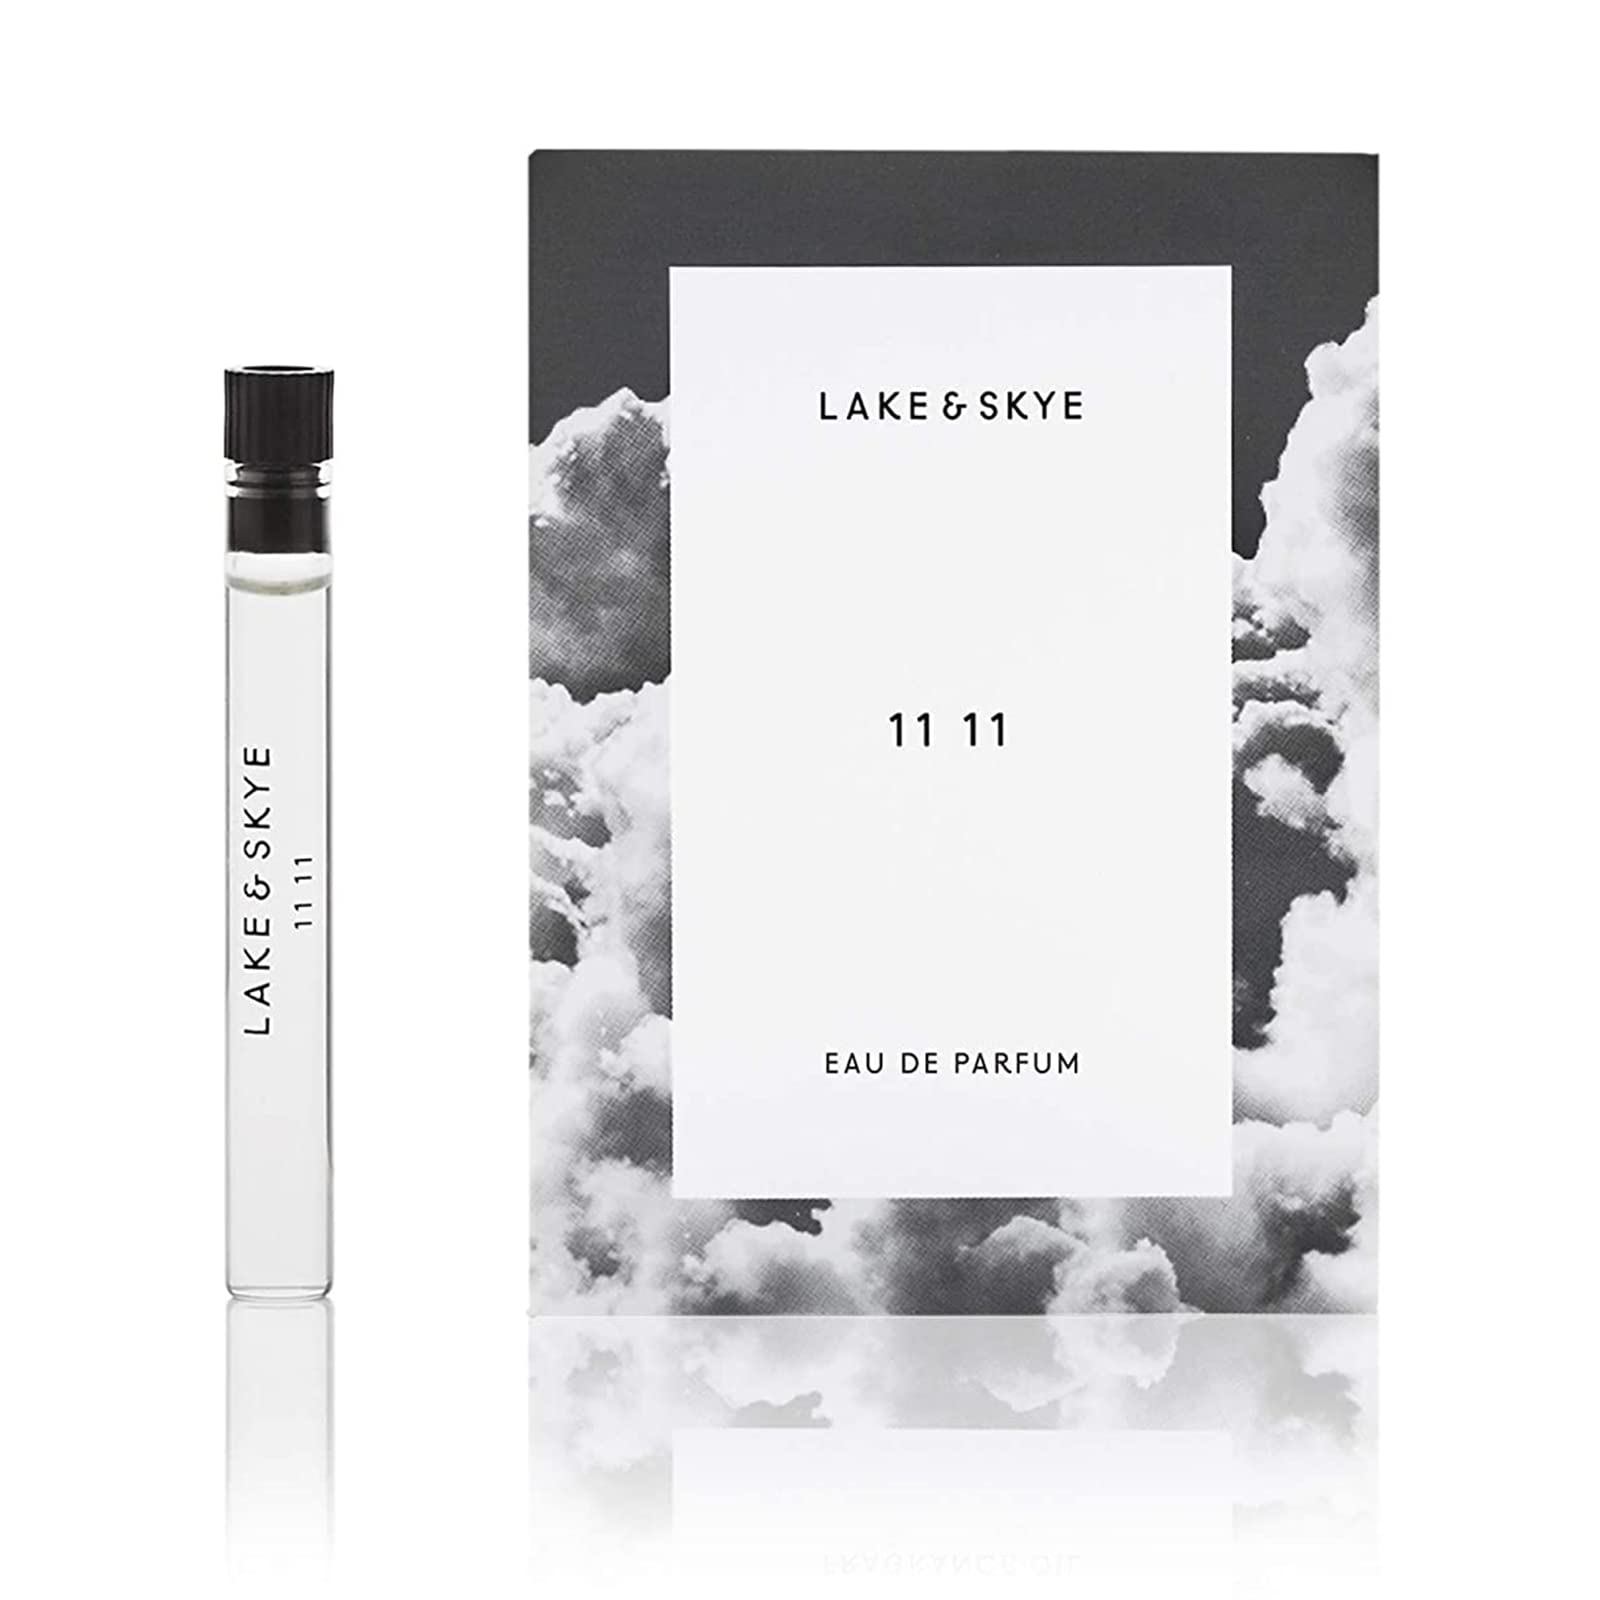 Lake & Skye 11 11 Eau de Parfum Spray, 0.04 fl oz (1.2 ml) - Clean, Sheer, Uplifting